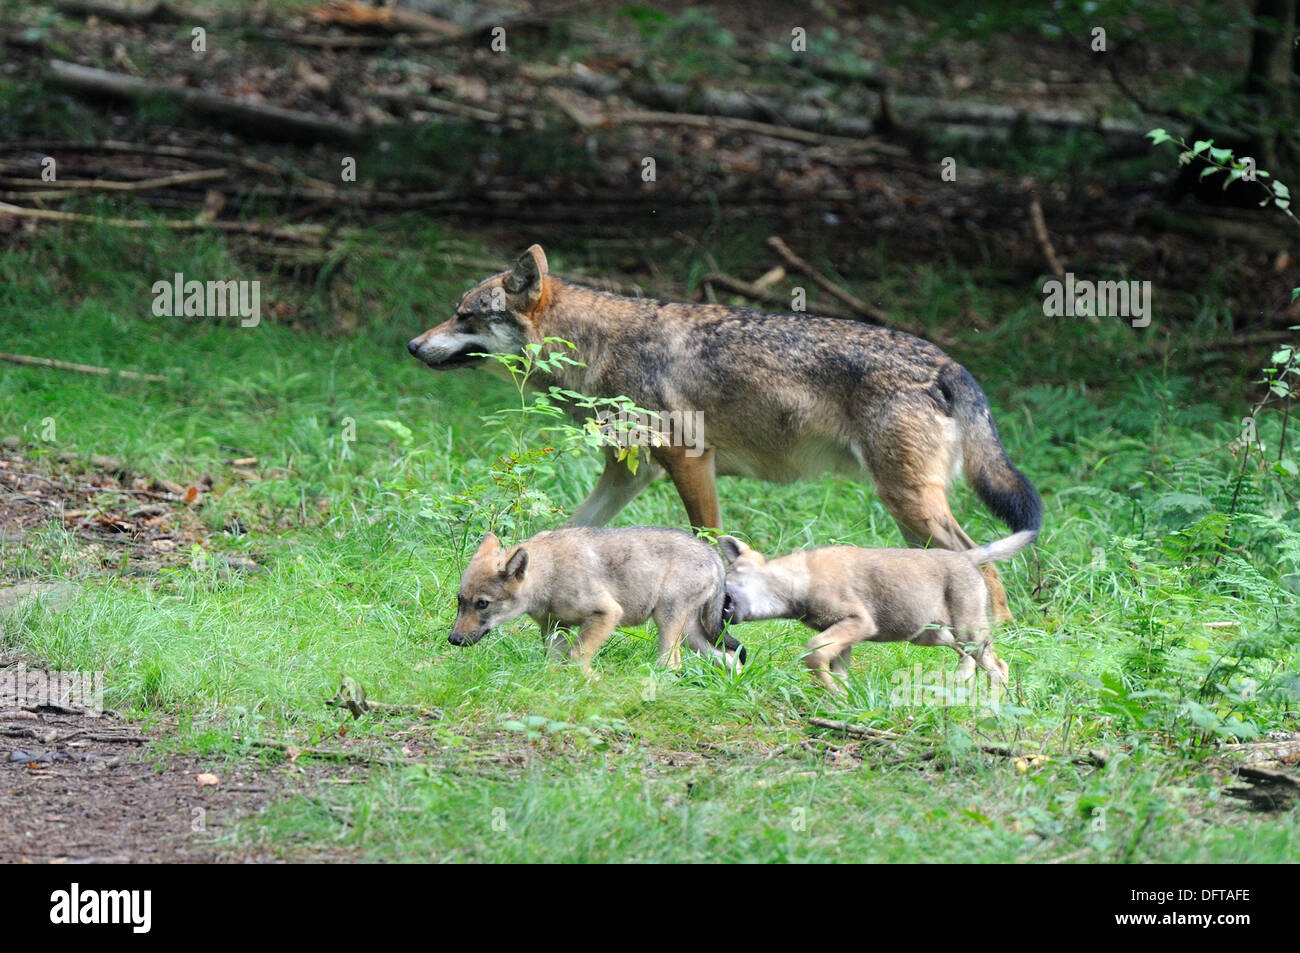 Europeo di lupo grigio adulto con cuccioli di età compresa tra i 2 mesi di età Canis lupus captive, Bayerischerwald National Park, Germania Foto Stock